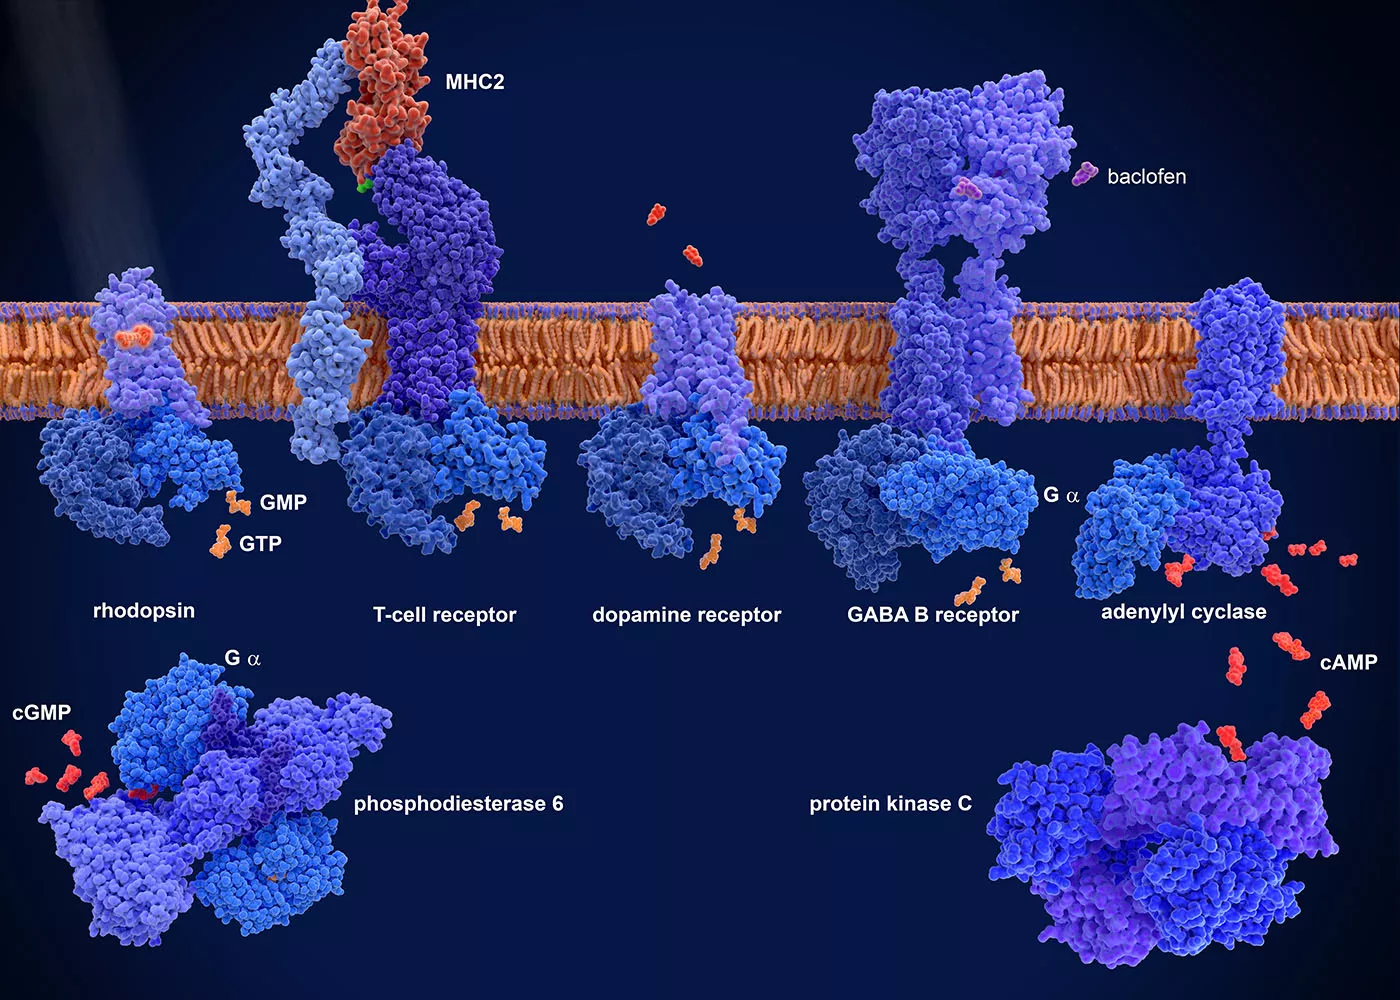 3D renderings of a collection of GABA receptors